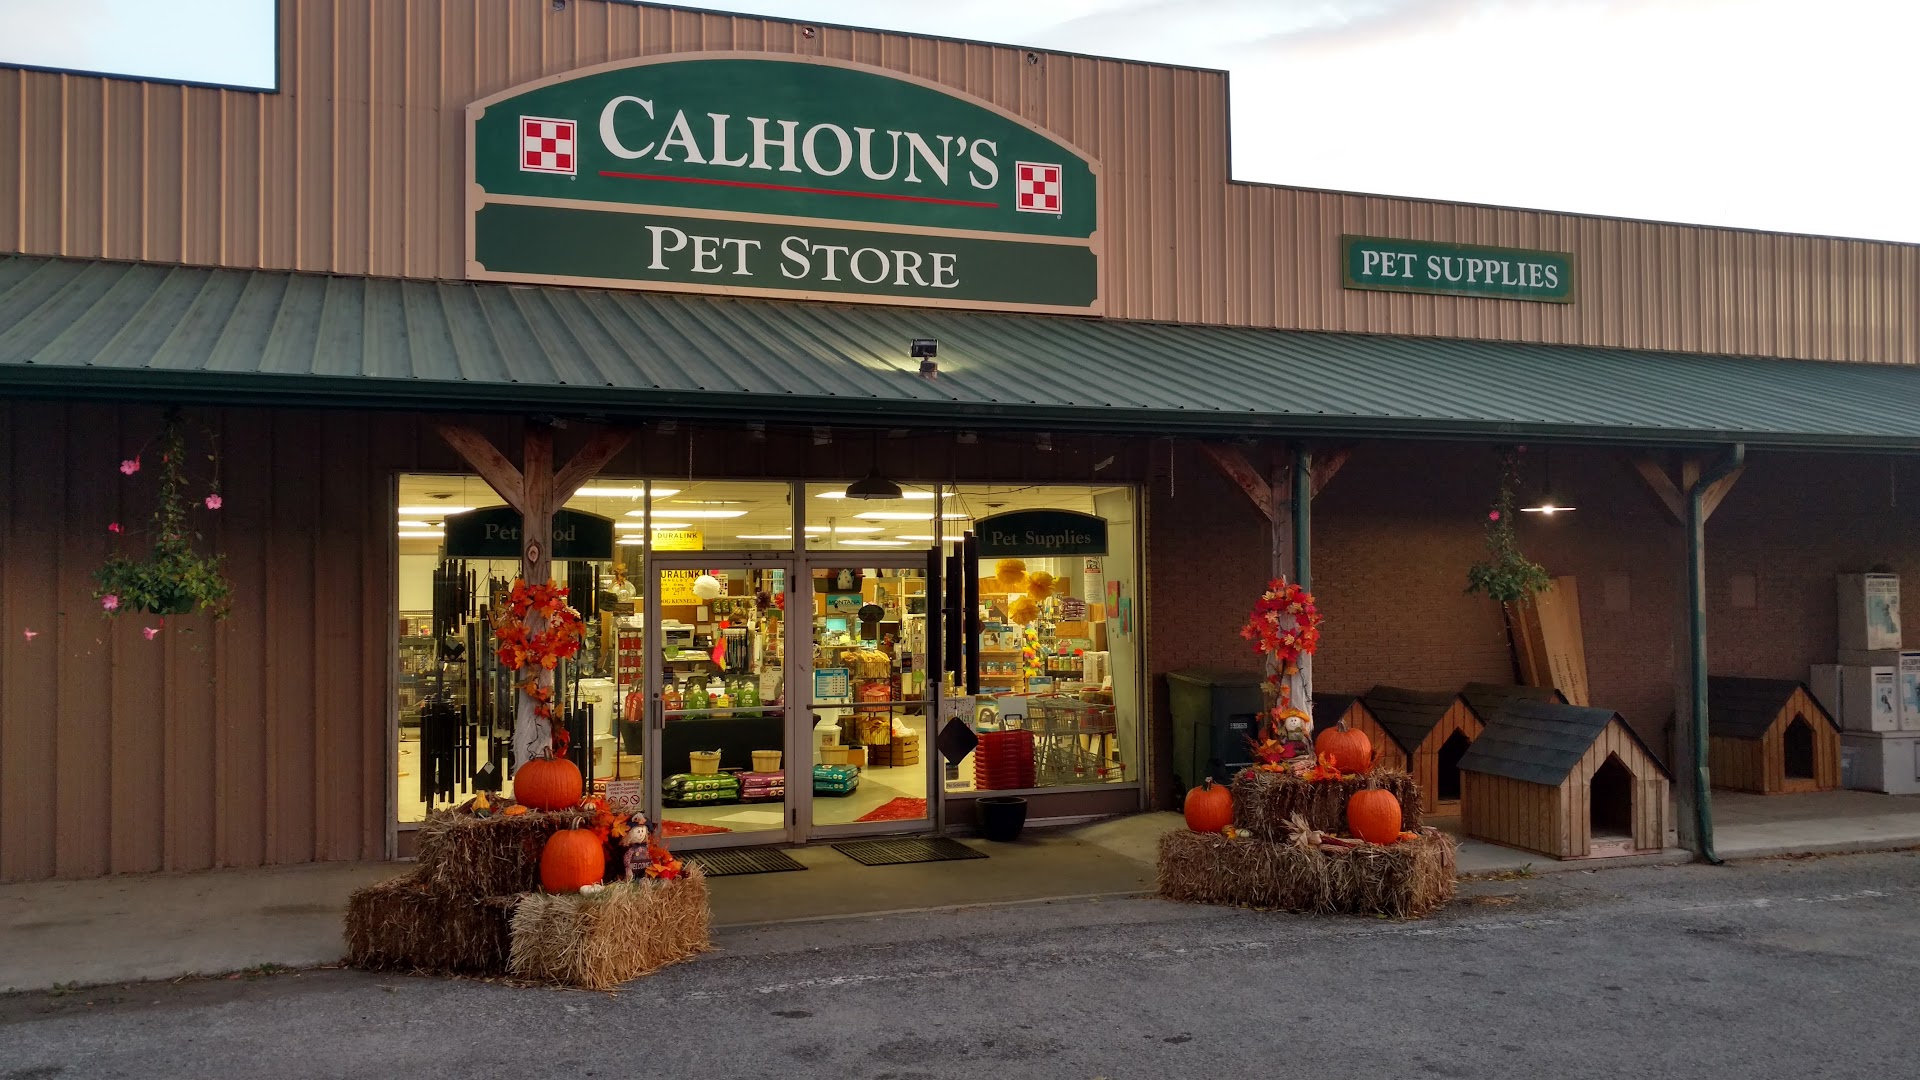 Calhoun's Pet Store